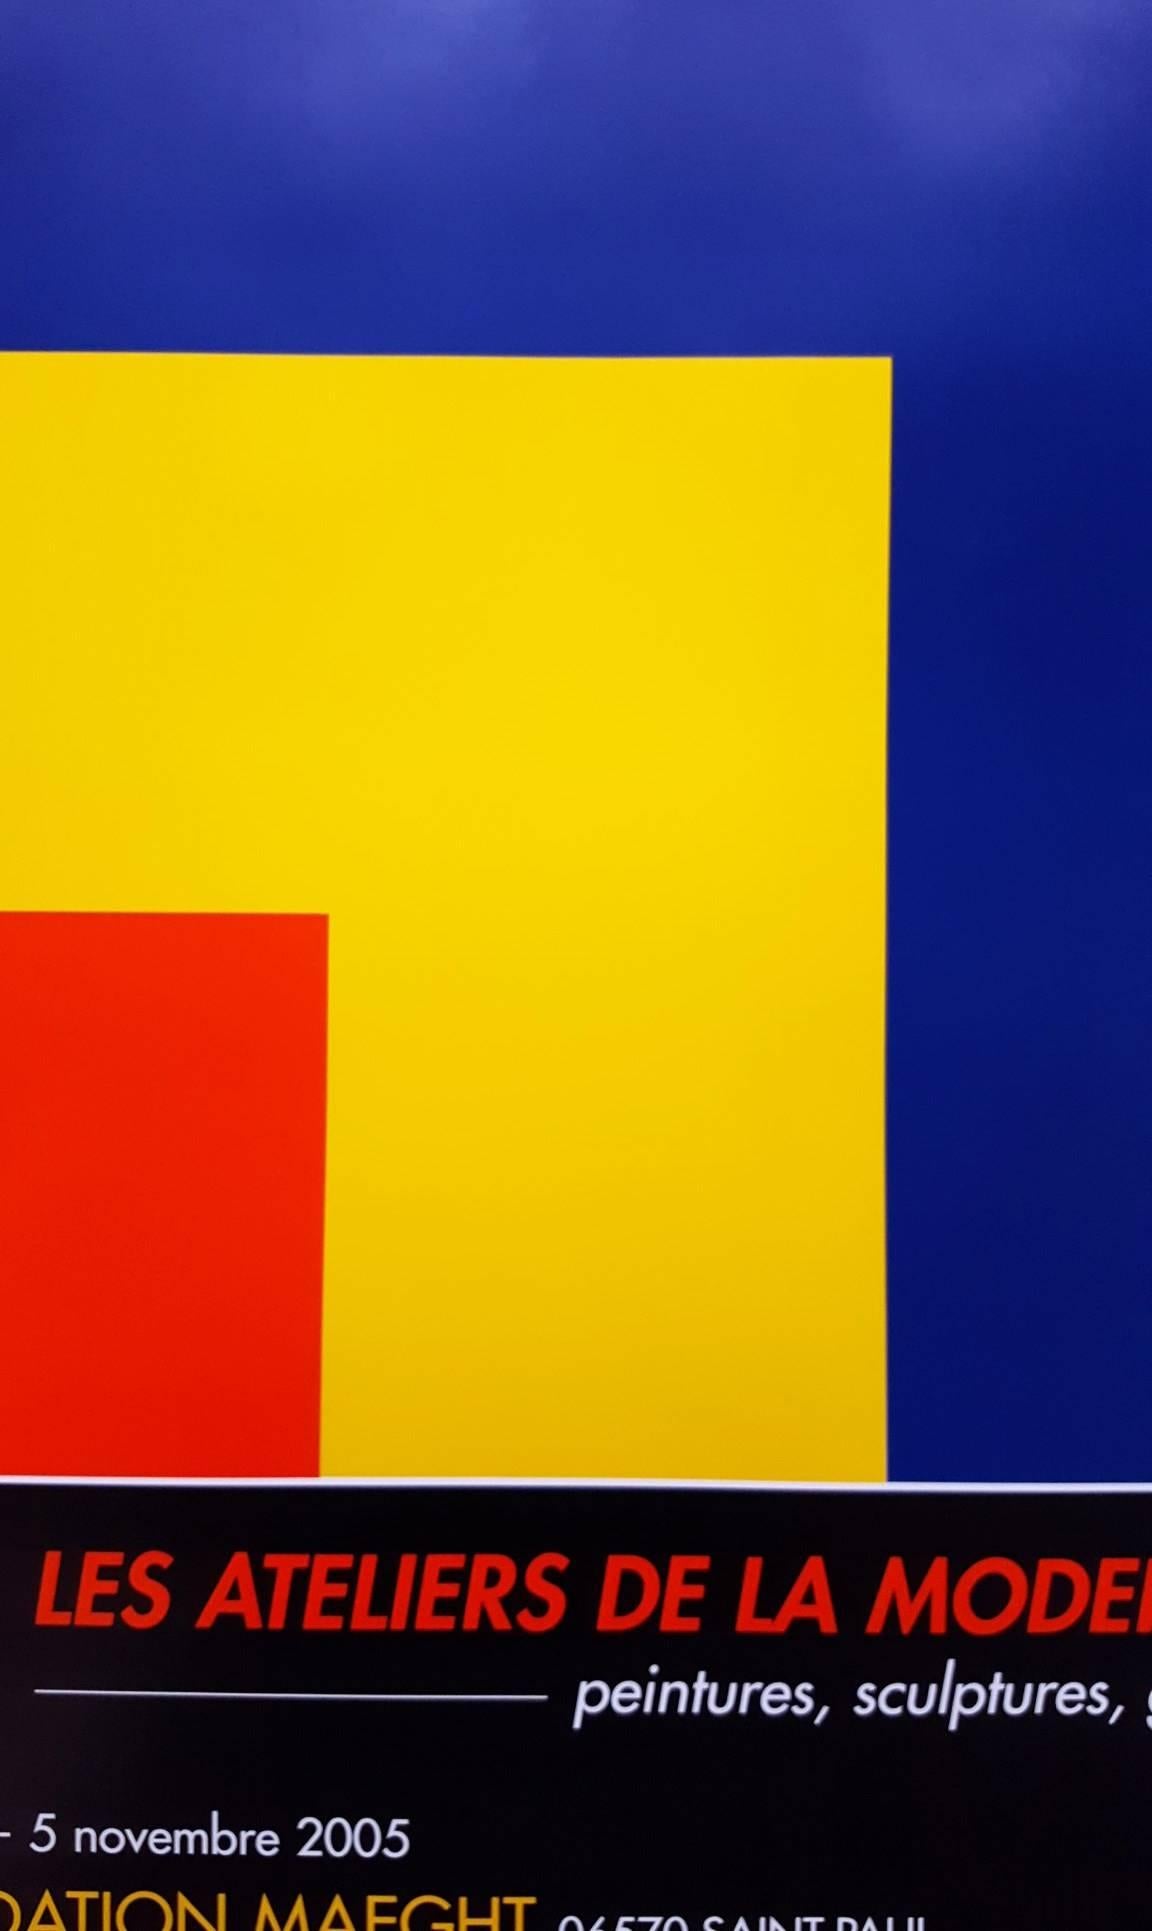 Fondation Maeght: Les Ateliers de La Modernite (Red, Yellow, Blue) - Minimalist Print by (after) Ellsworth Kelly